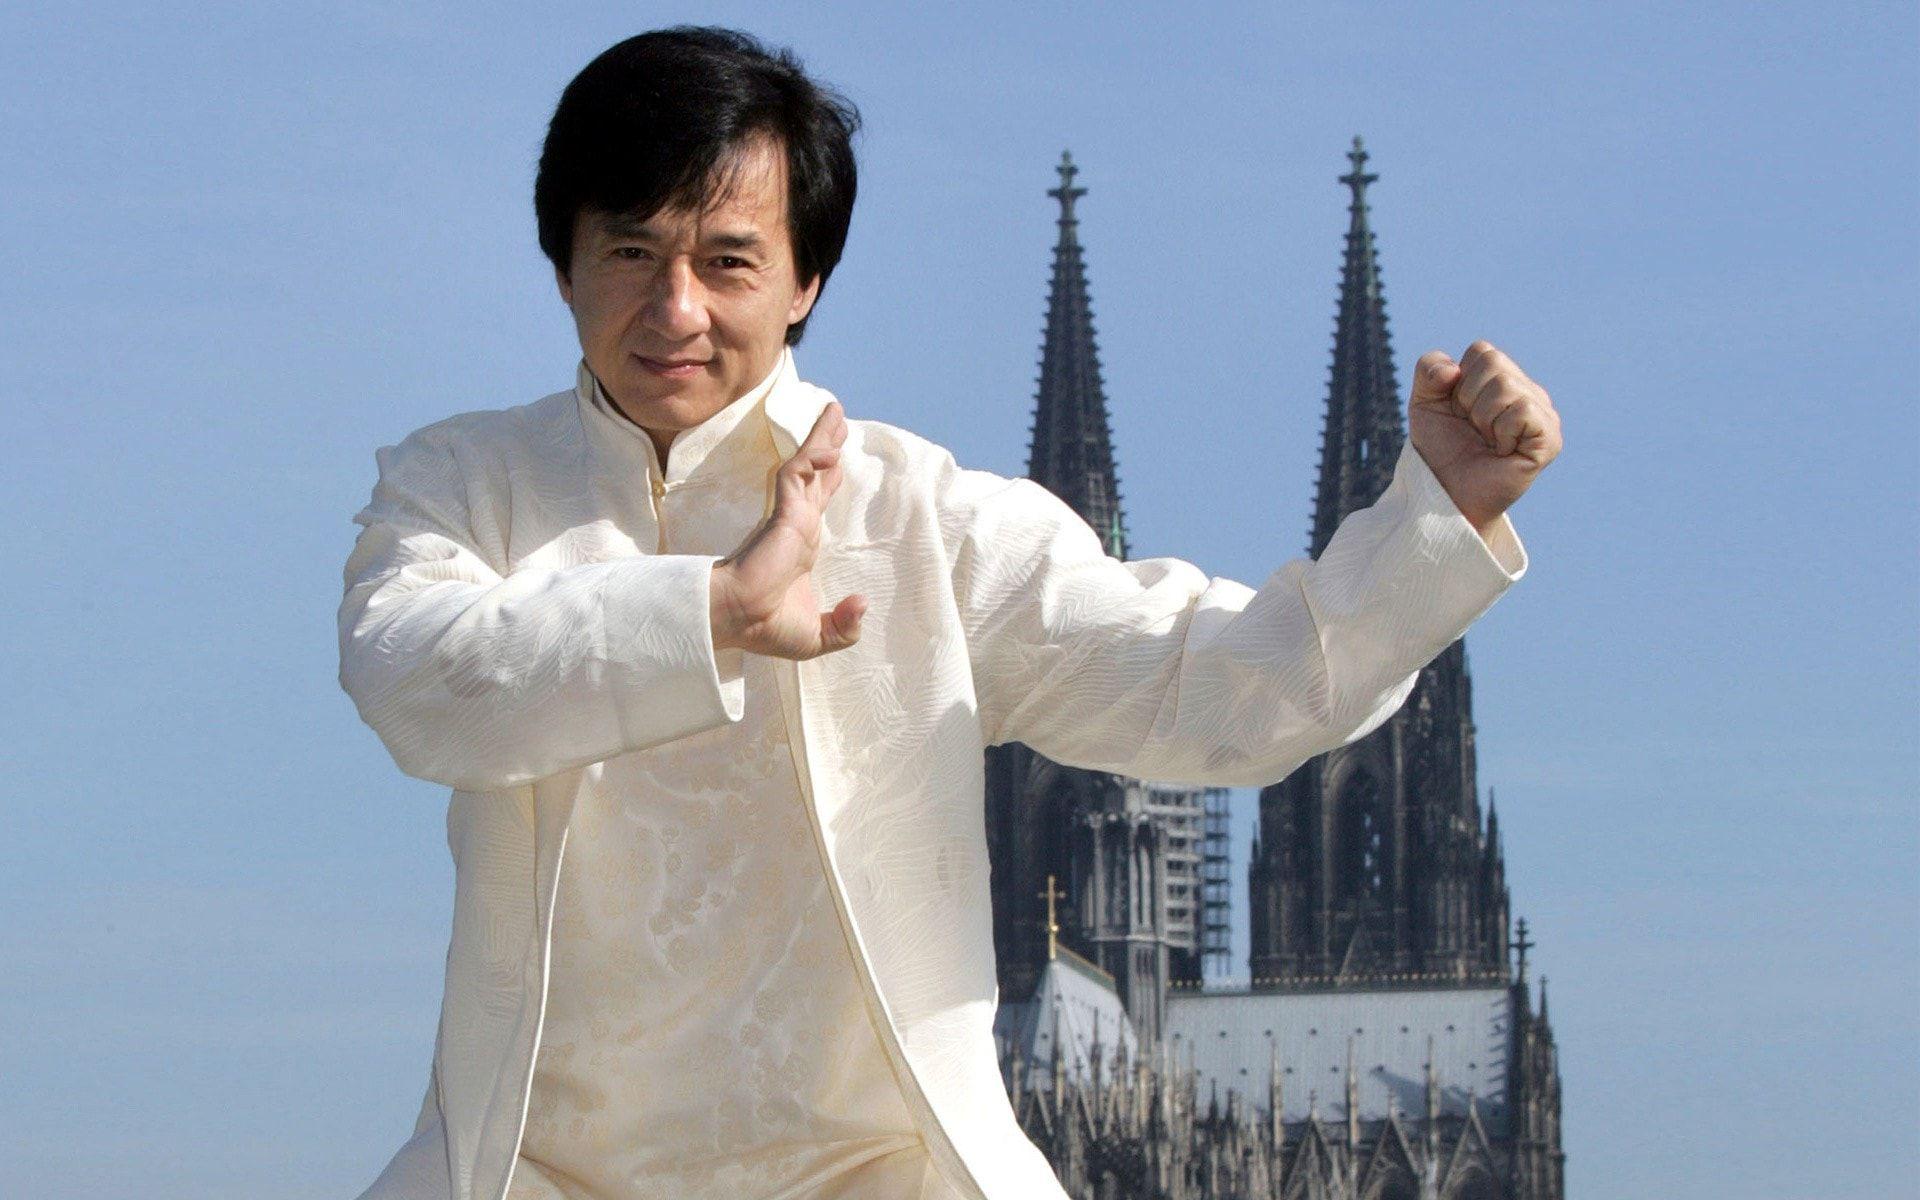 Jackie Chan Full HD Wallpaper Photo Pics Image Startwallpaper